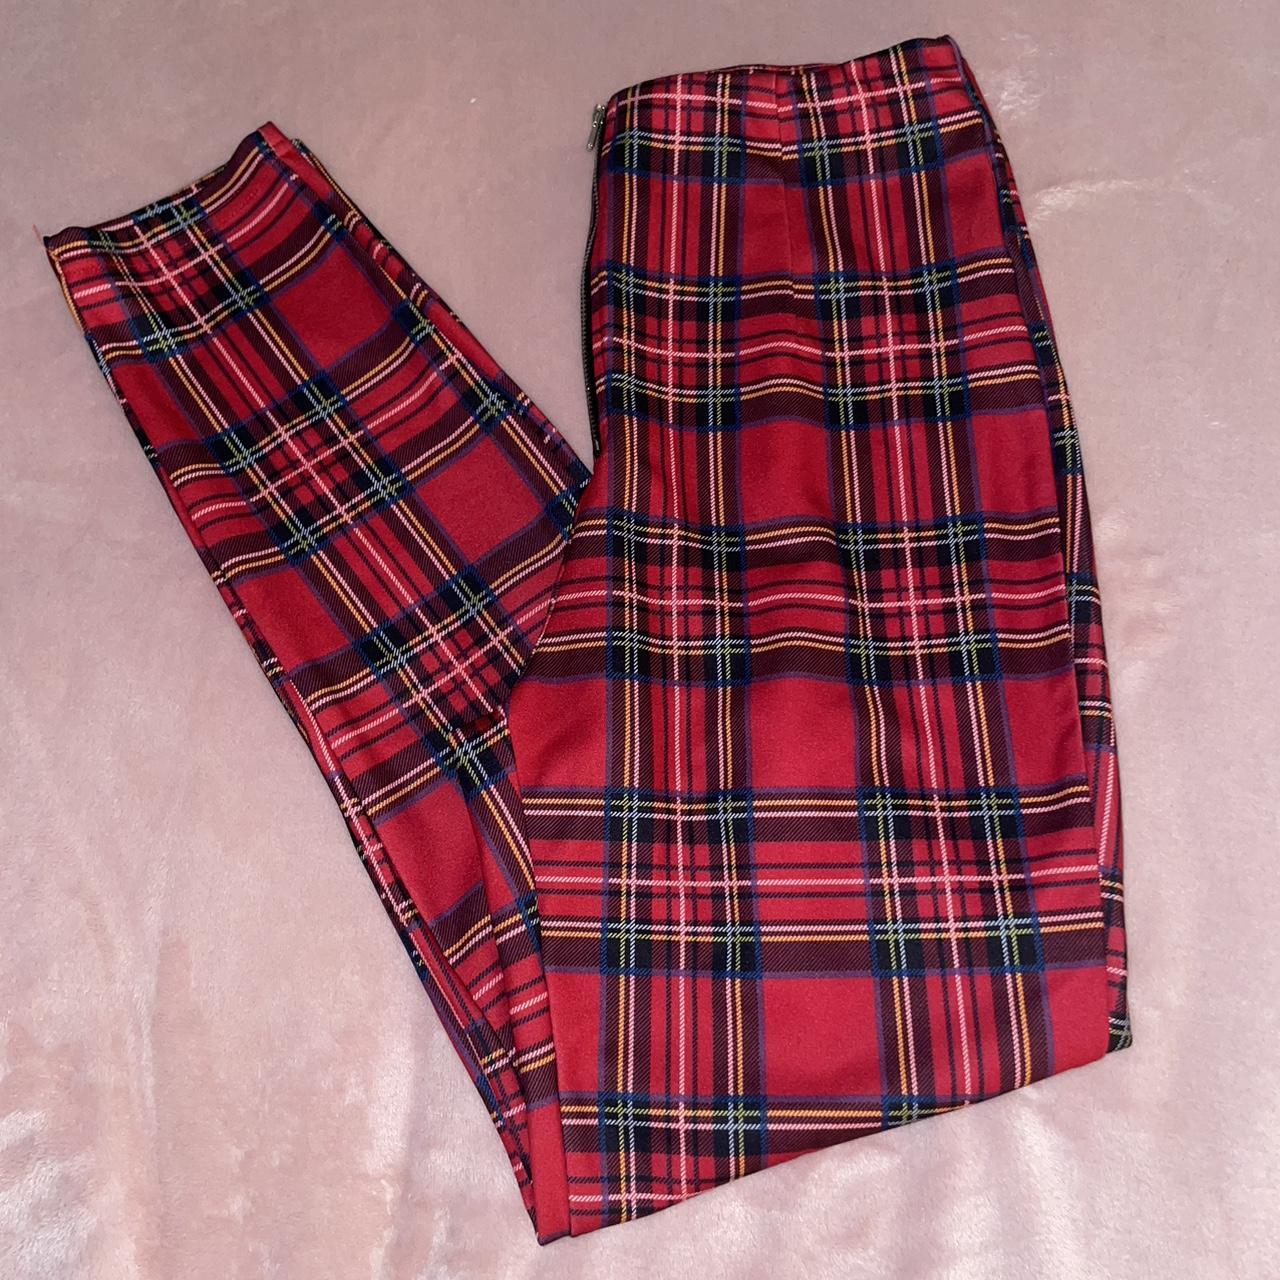 Chain Detail Tartan Plaid Pants | SHEIN USA | Plaid outfits, Plaid pants  women, Plaid fashion